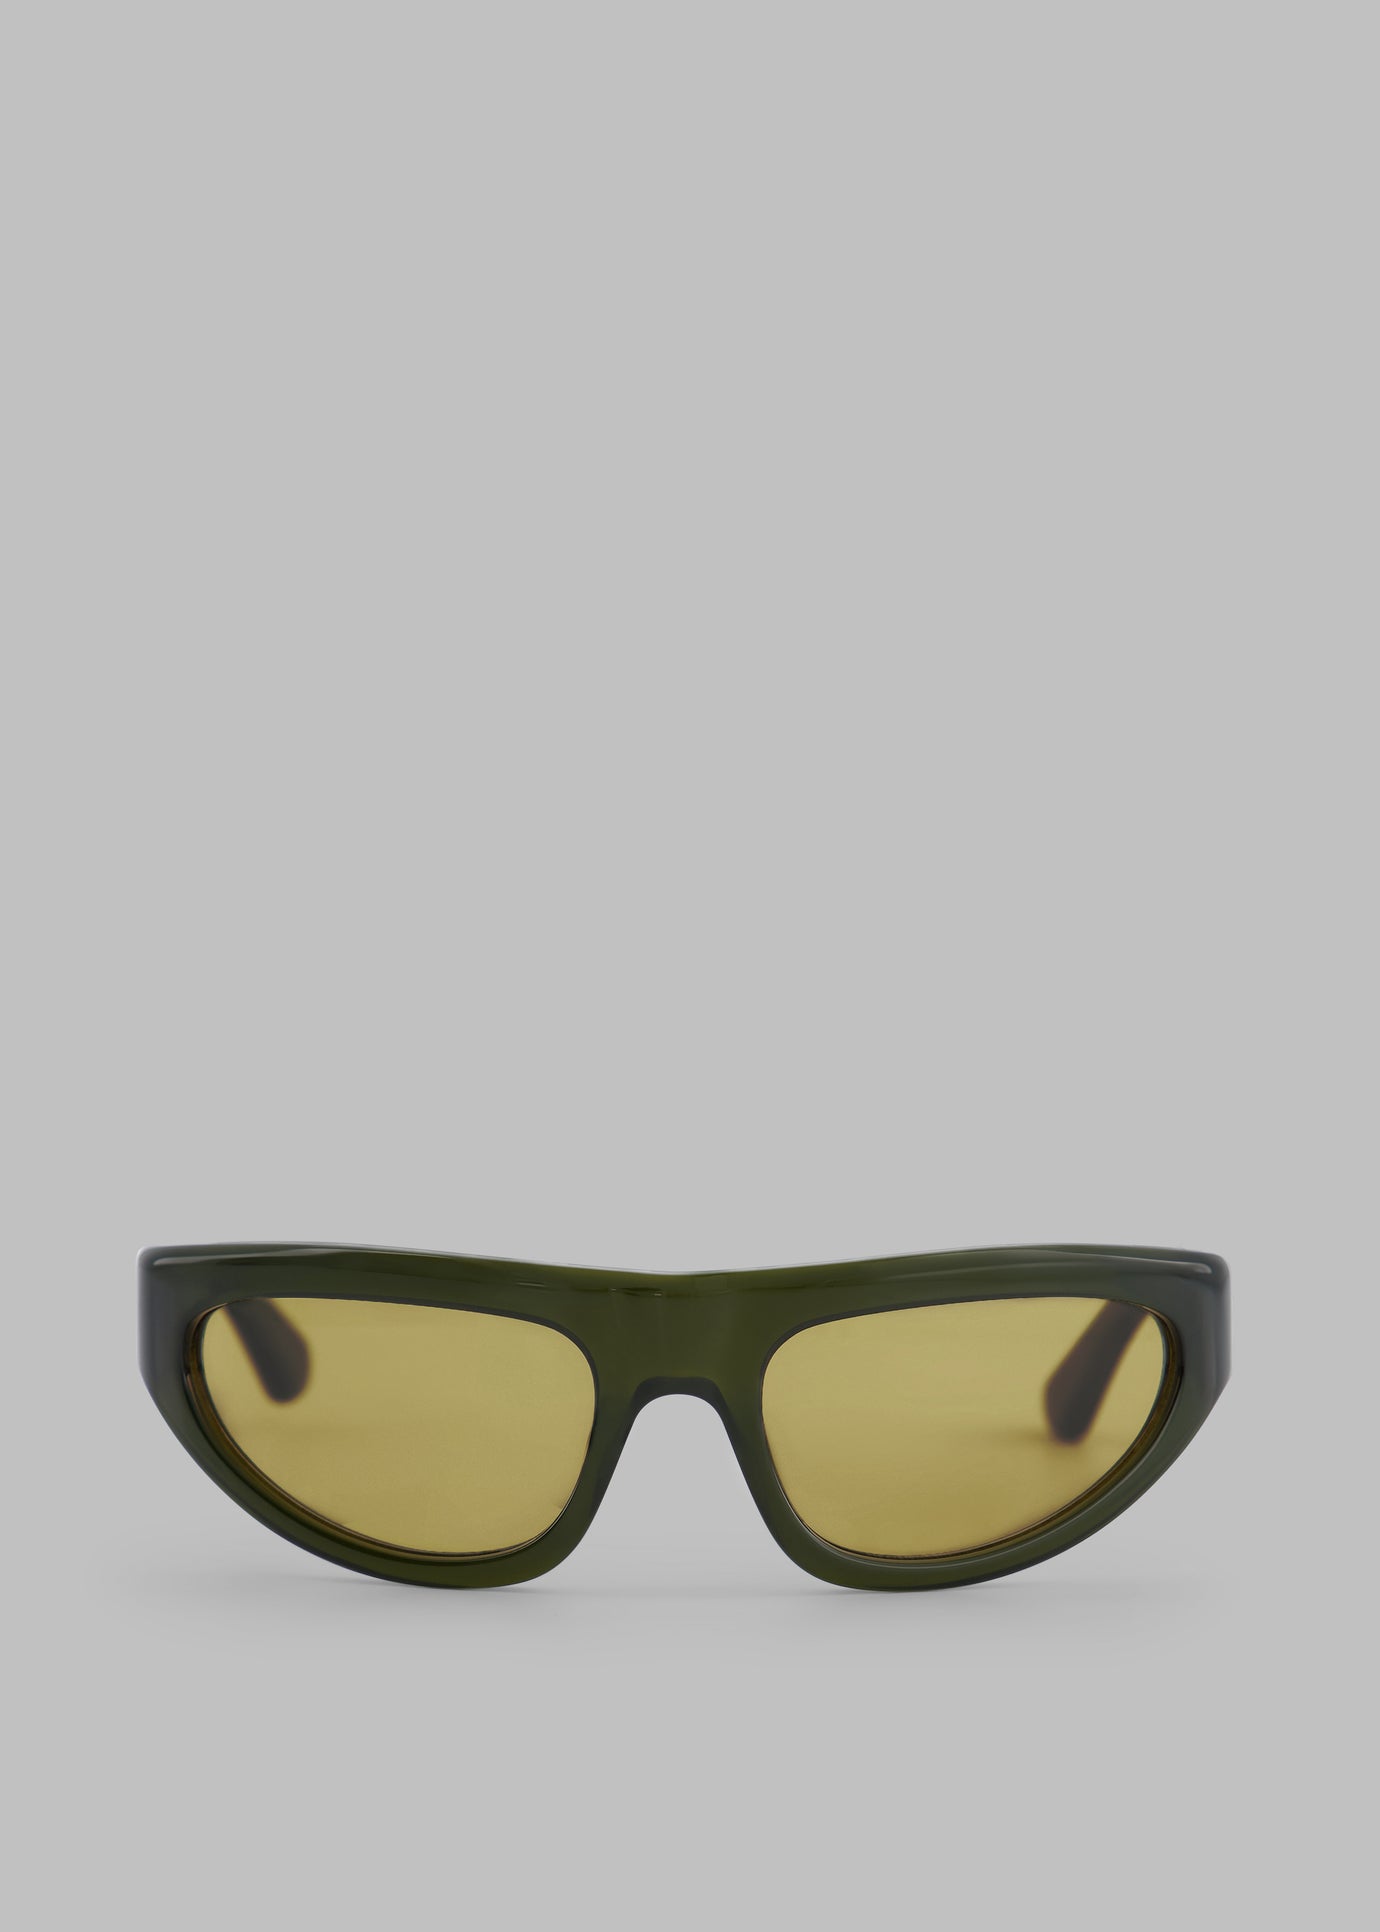 Port Tanger Malick Sunglasses - Cardamom Acetate/Warm Olive Lens